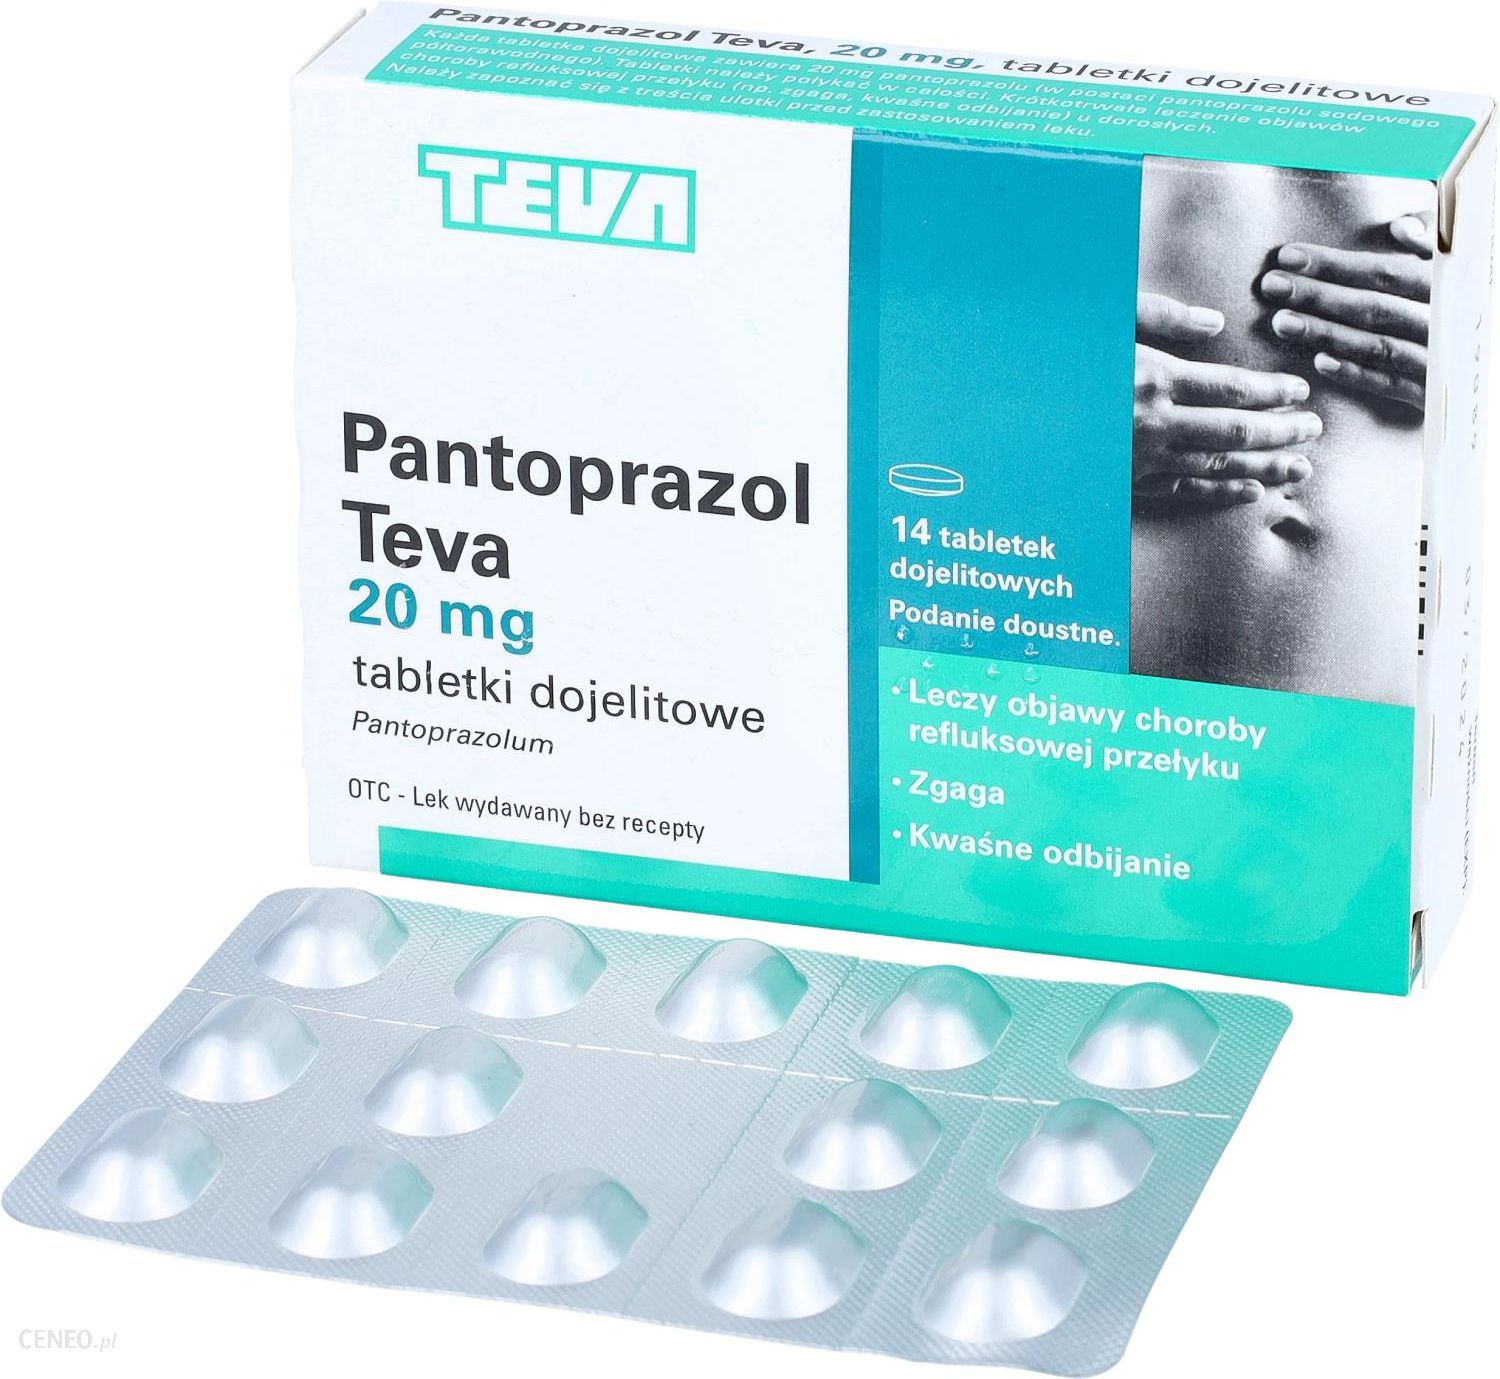 kijken boog kaas Pantoprazol Teva 20 mg 14 tabl. - Opinie i ceny na Ceneo.pl